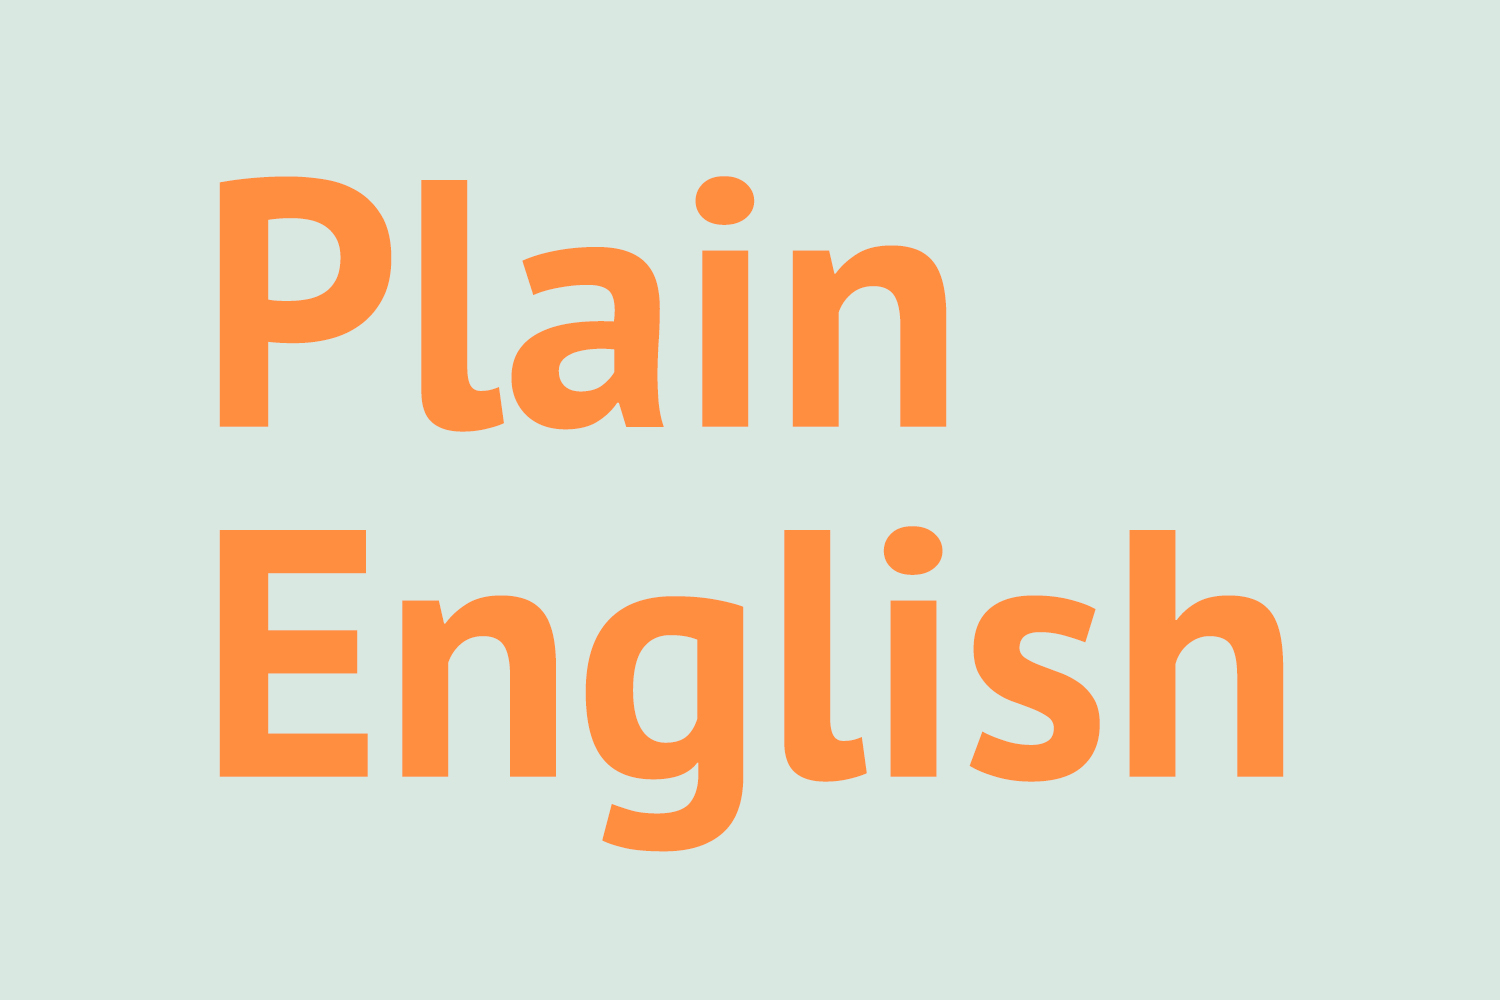 Graphic of plain english